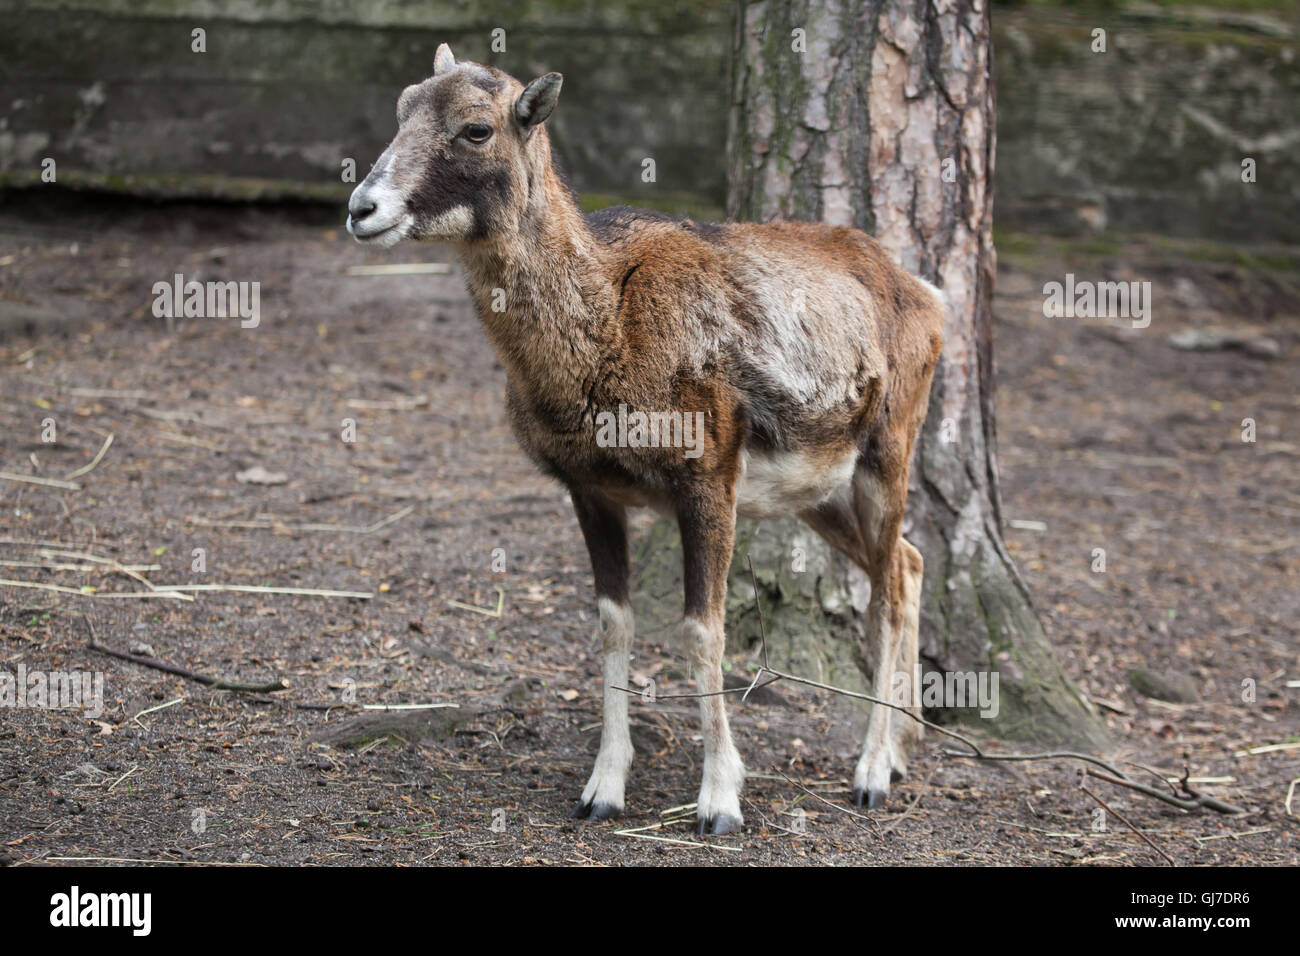 European mouflon (Ovis orientalis musimon) at Decin Zoo in North Bohemia, Czech Republic. Stock Photo